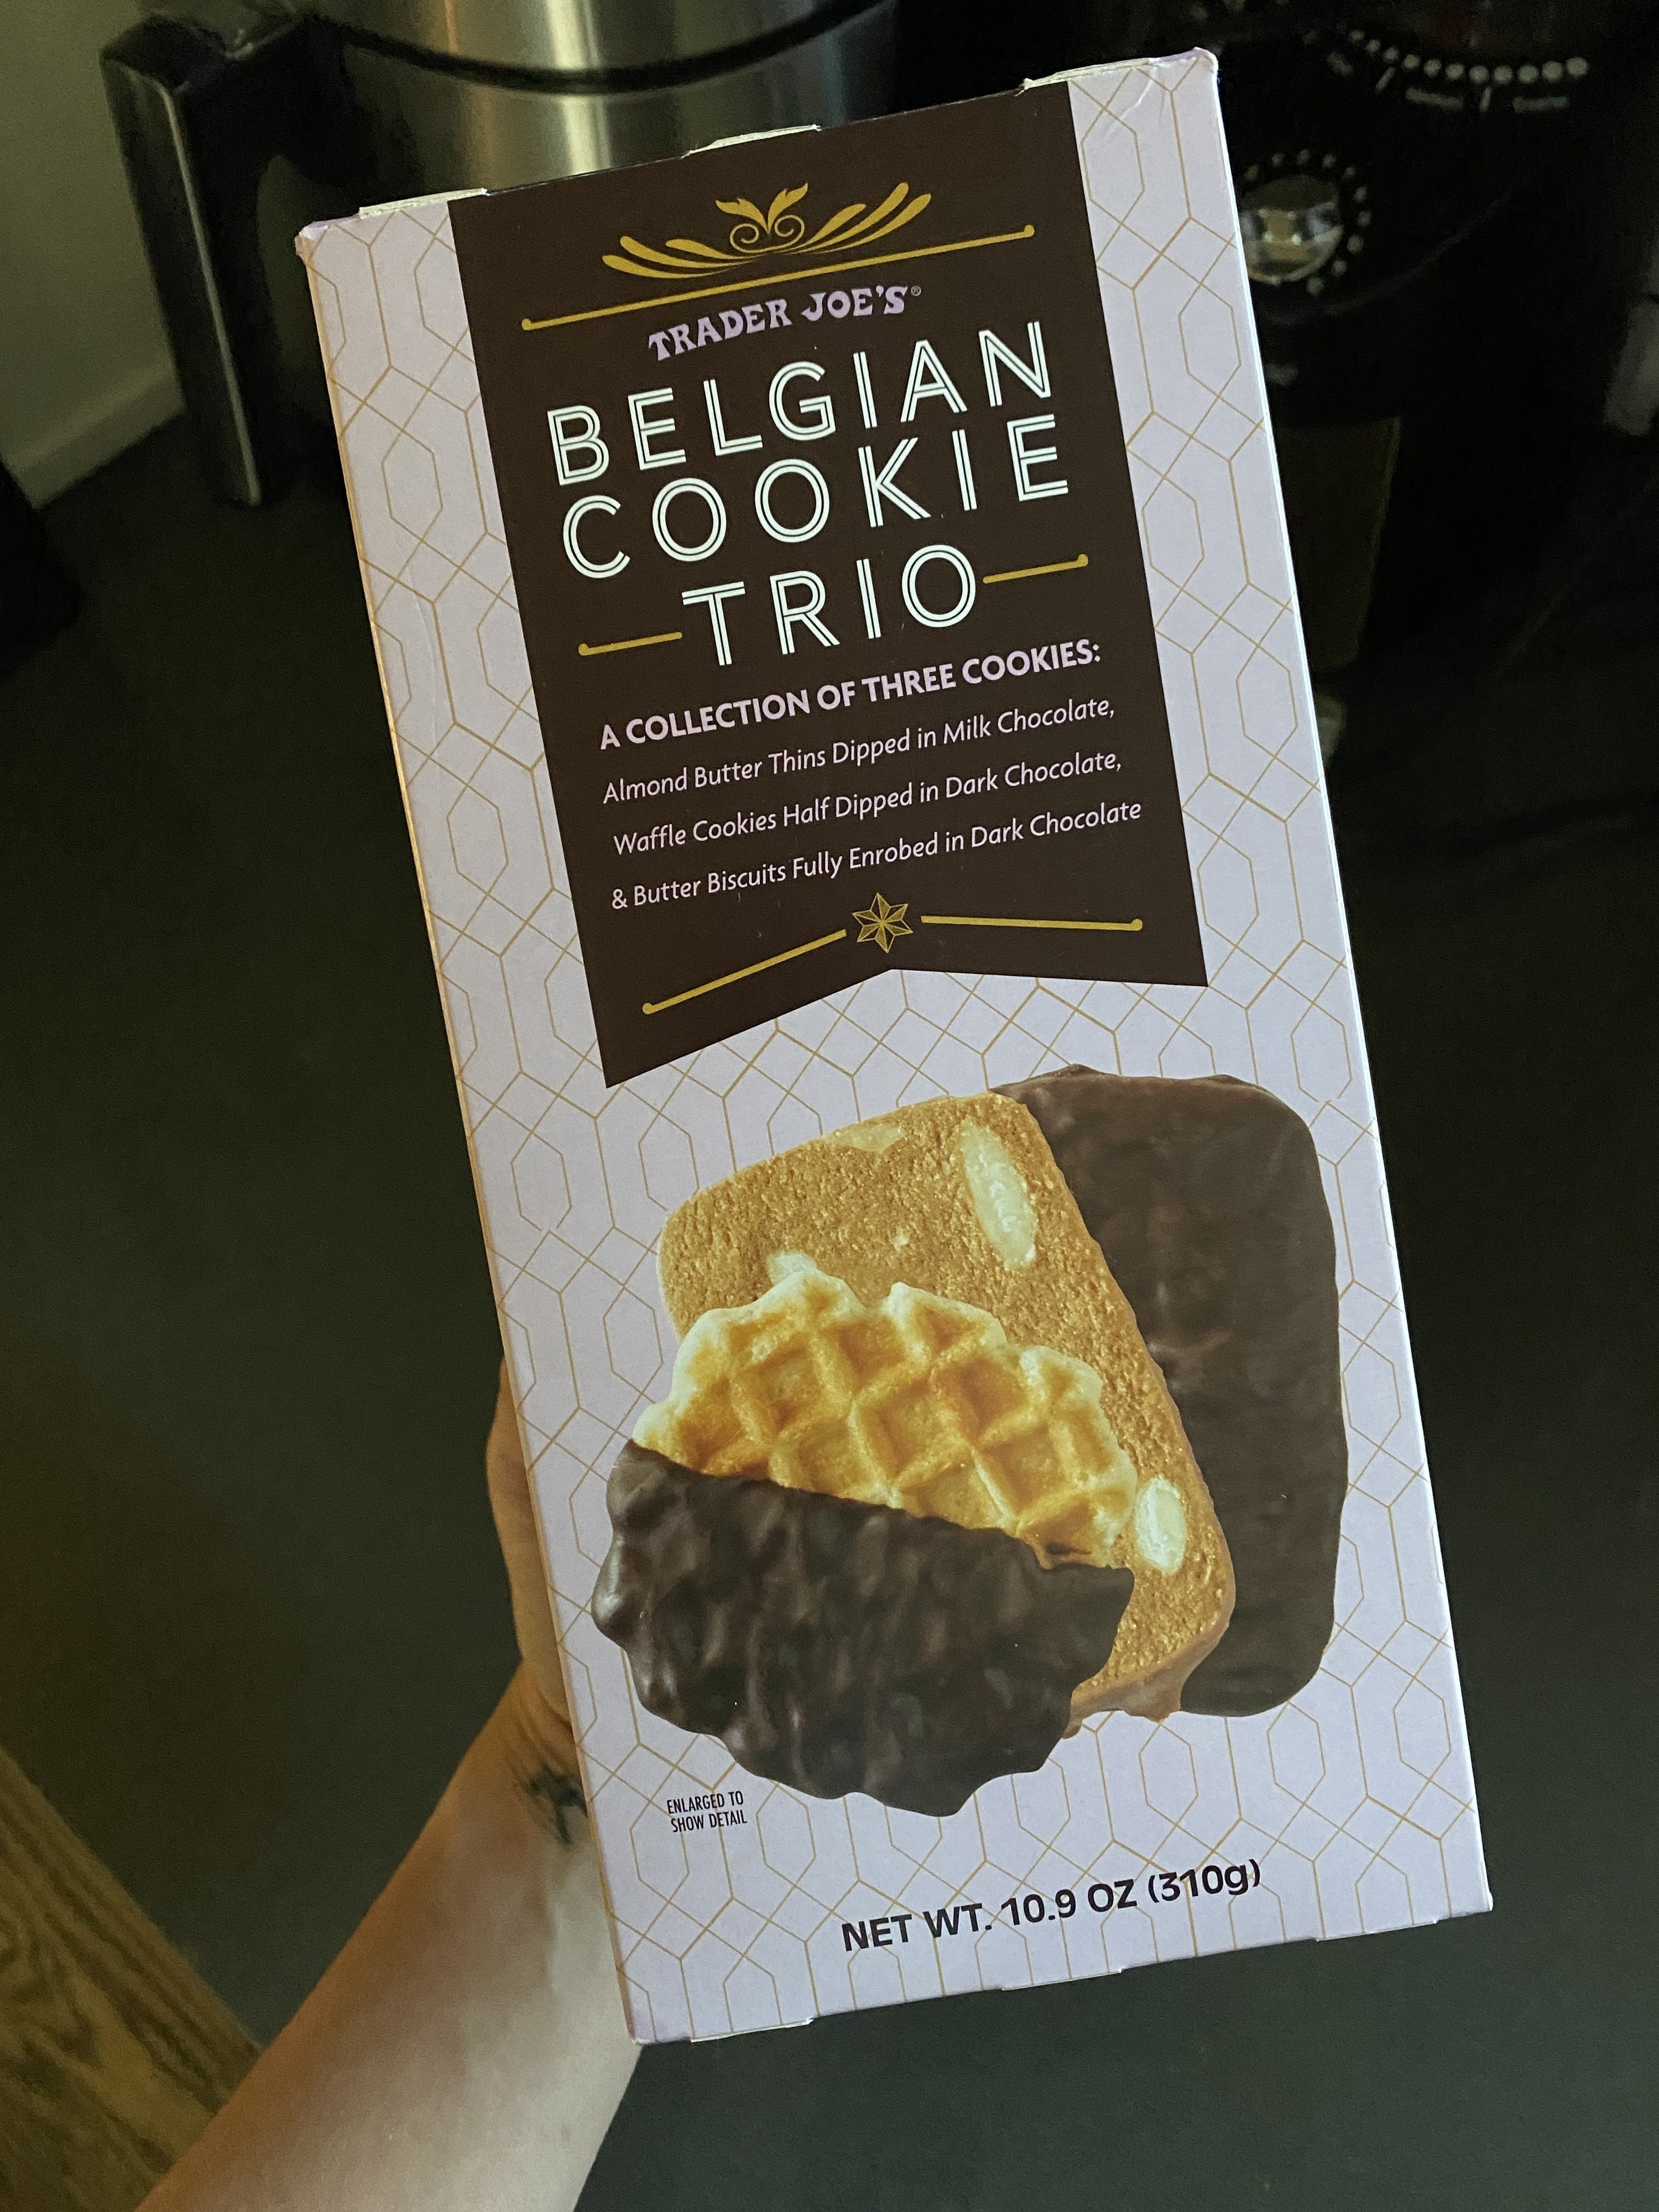 Belgian Cookie Trio